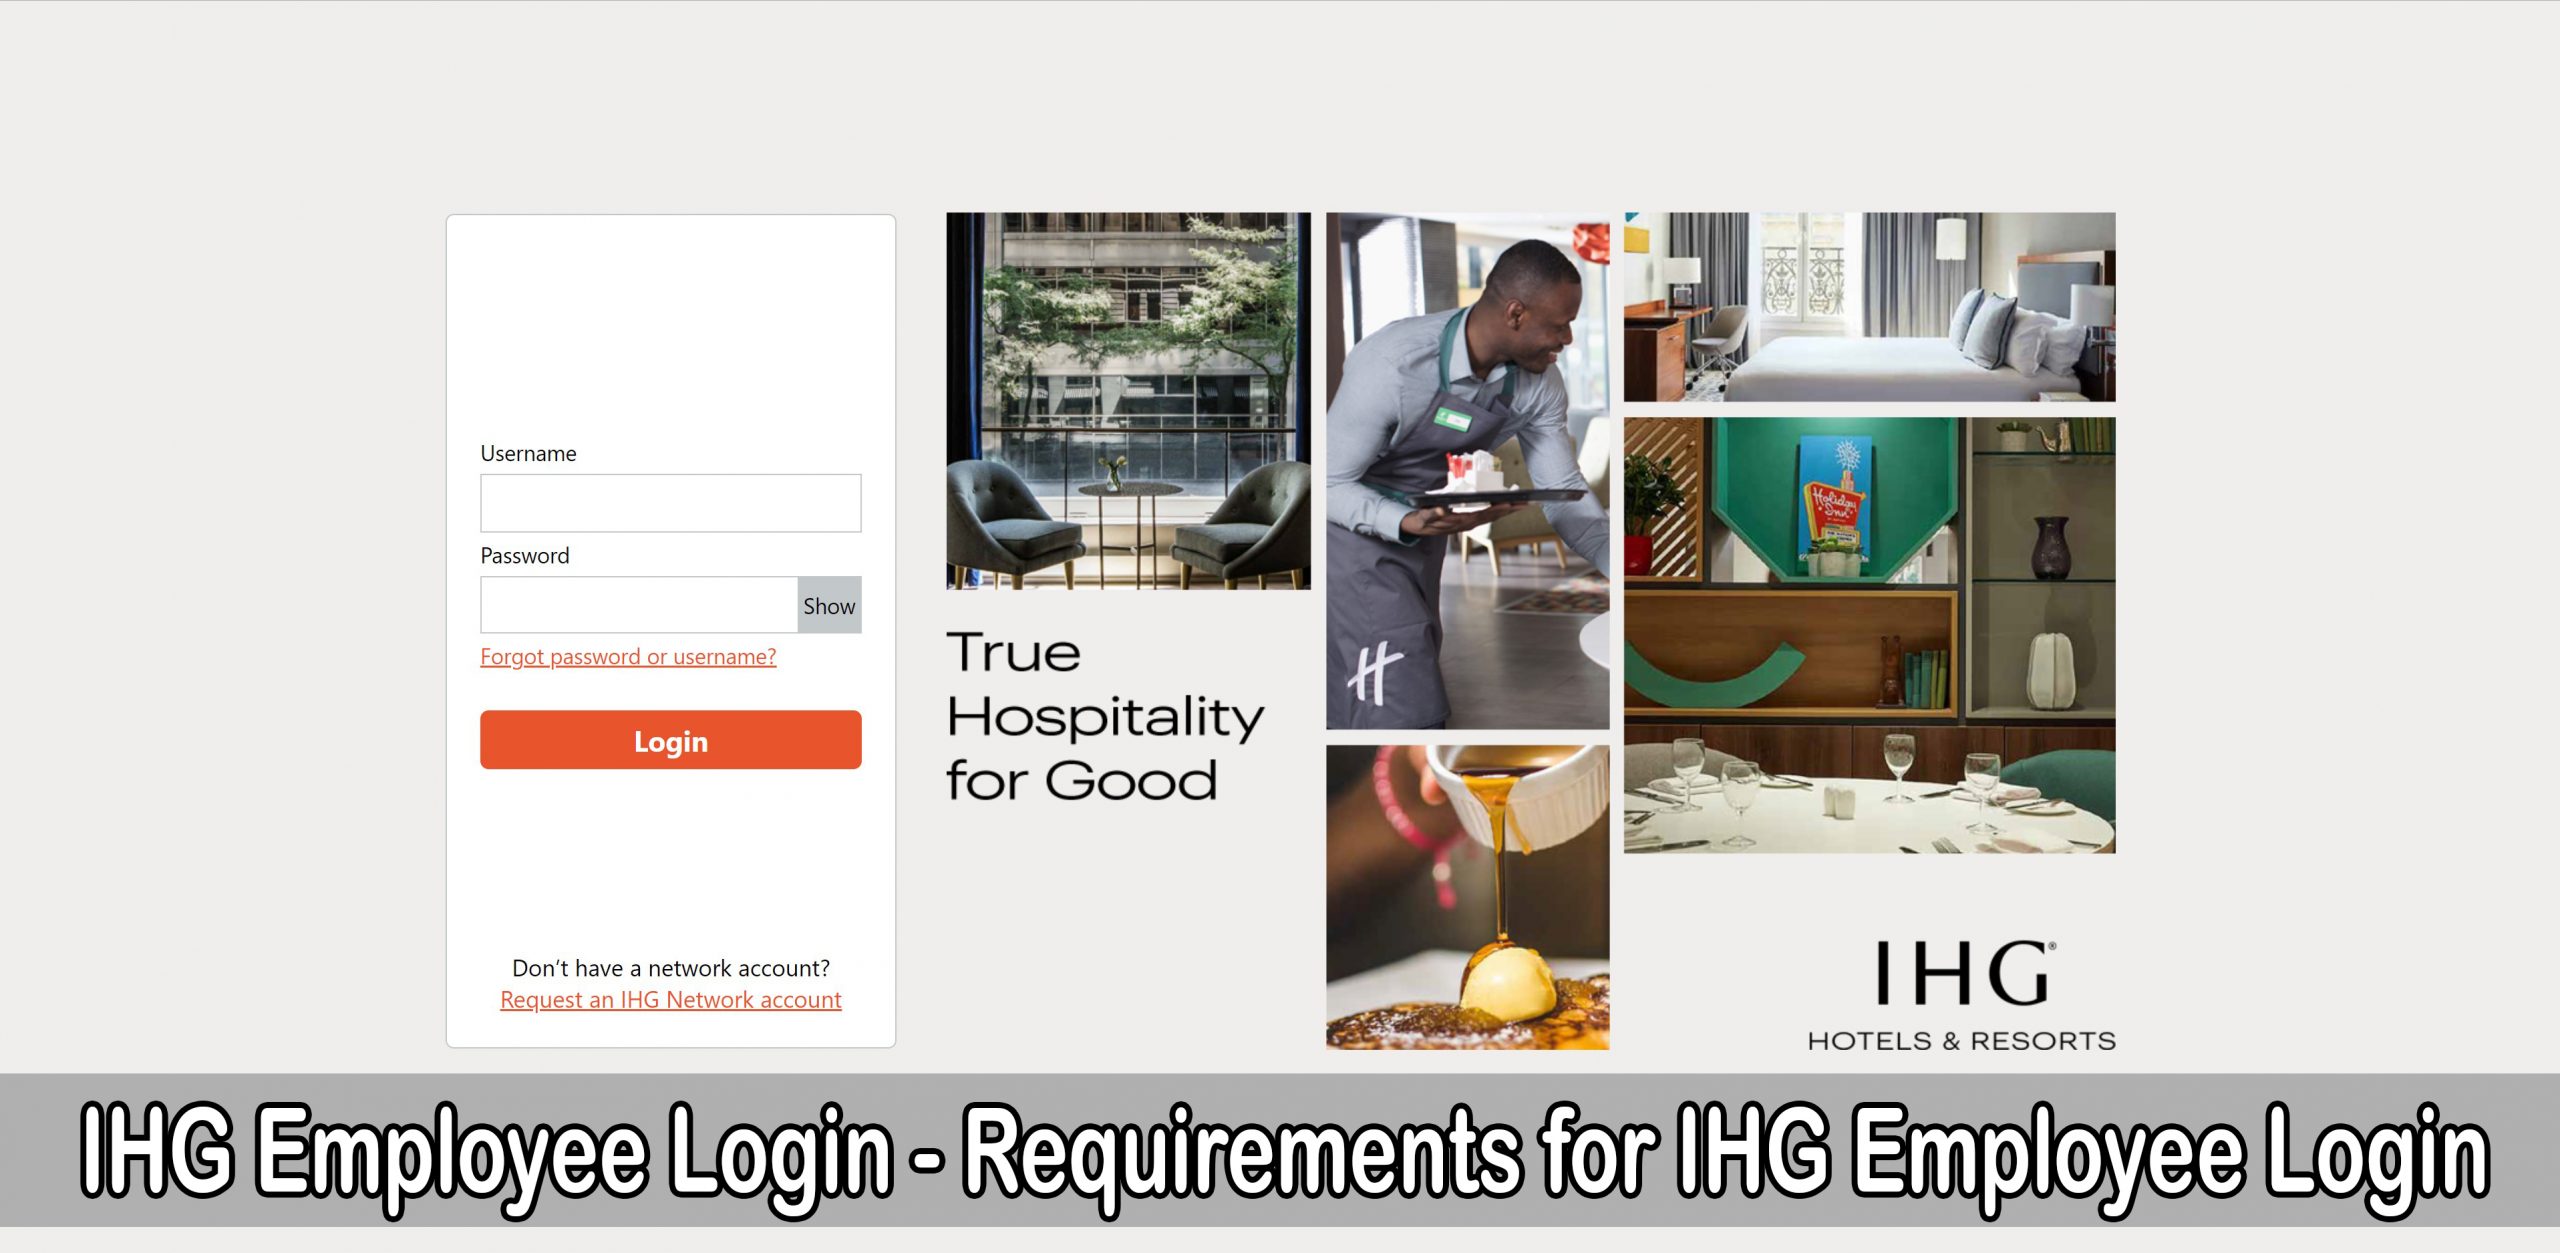 IHG Employee Login - Requirements for IHG Employee Login